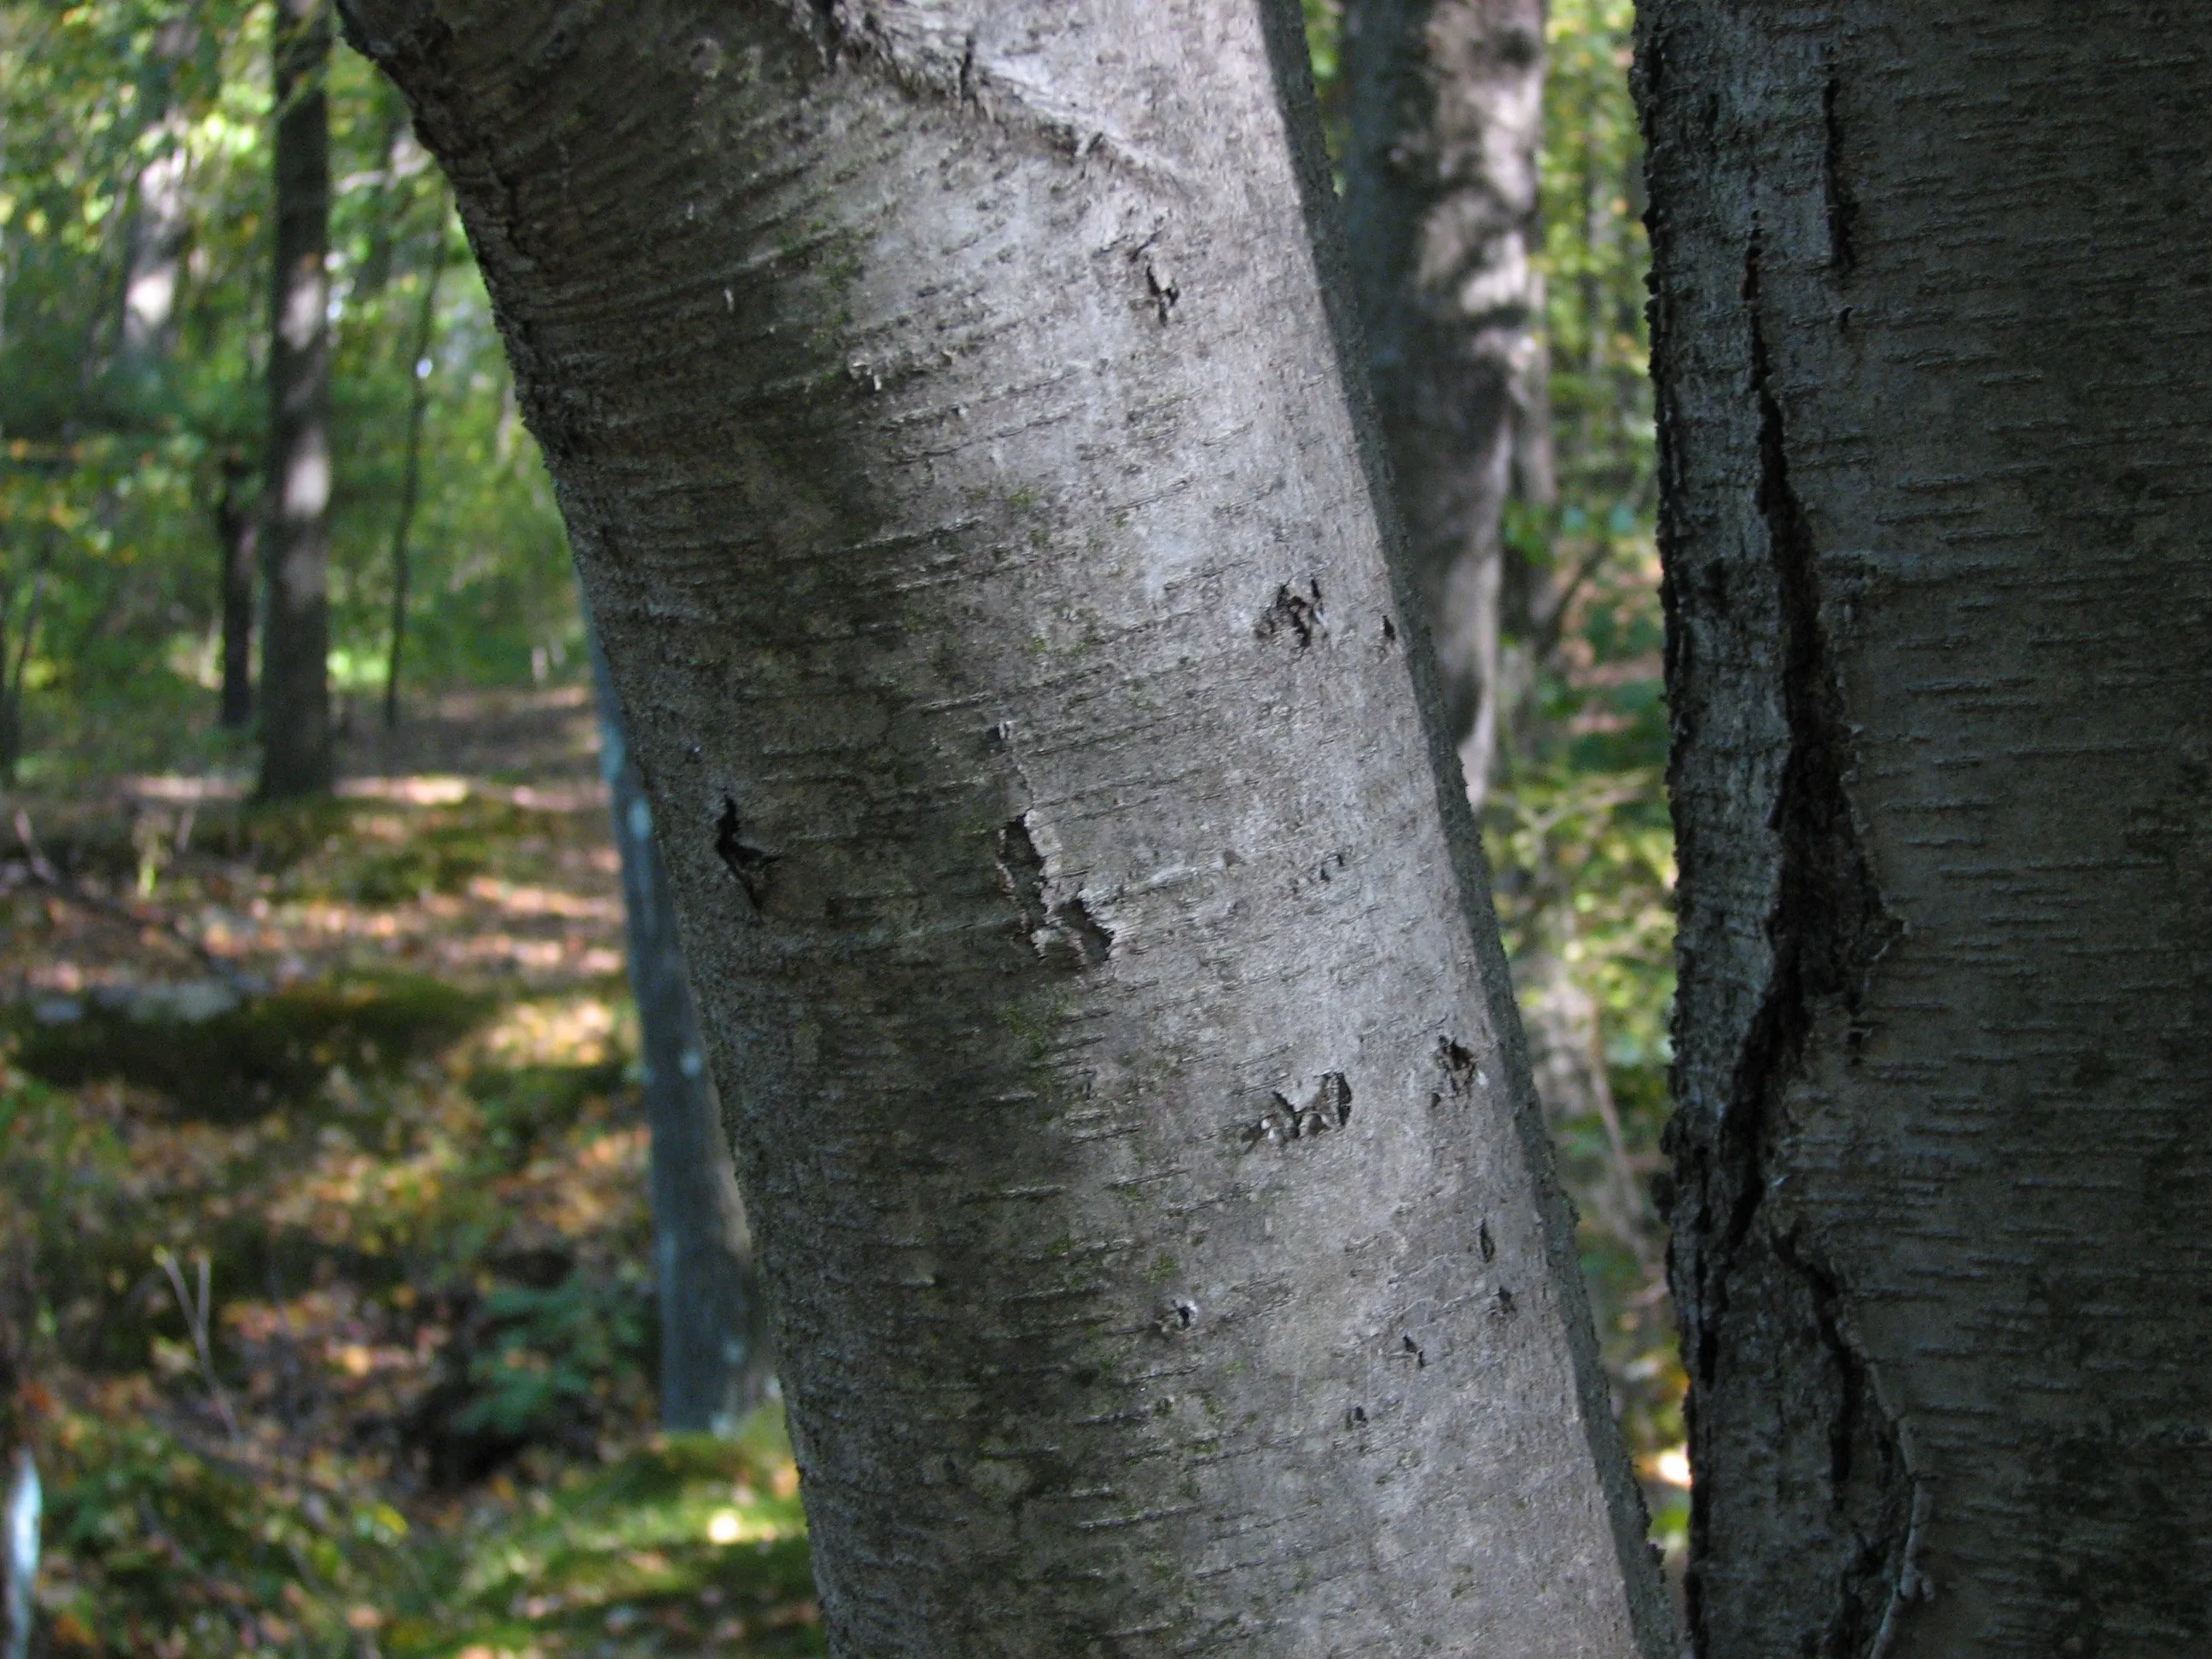 Темно березка. Береза Шмидта (железная береза ). Береза Даурская (Betula dahurica).